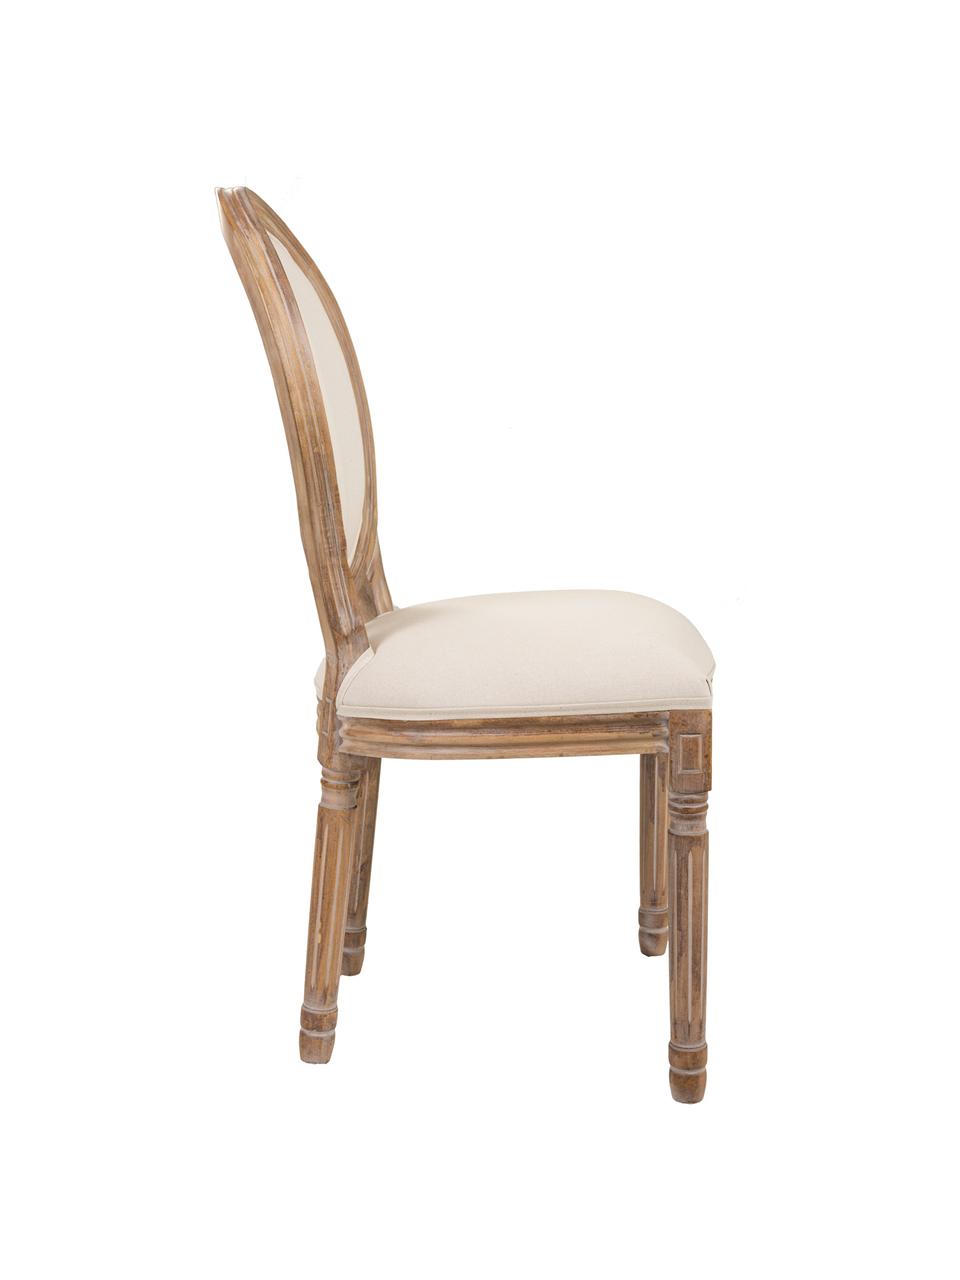 Sedia in legno con seduta imbottita Louis, Rivestimento: tessuto Telaio, Marrone, beige, Larg. 46 x Prof. 48 cm